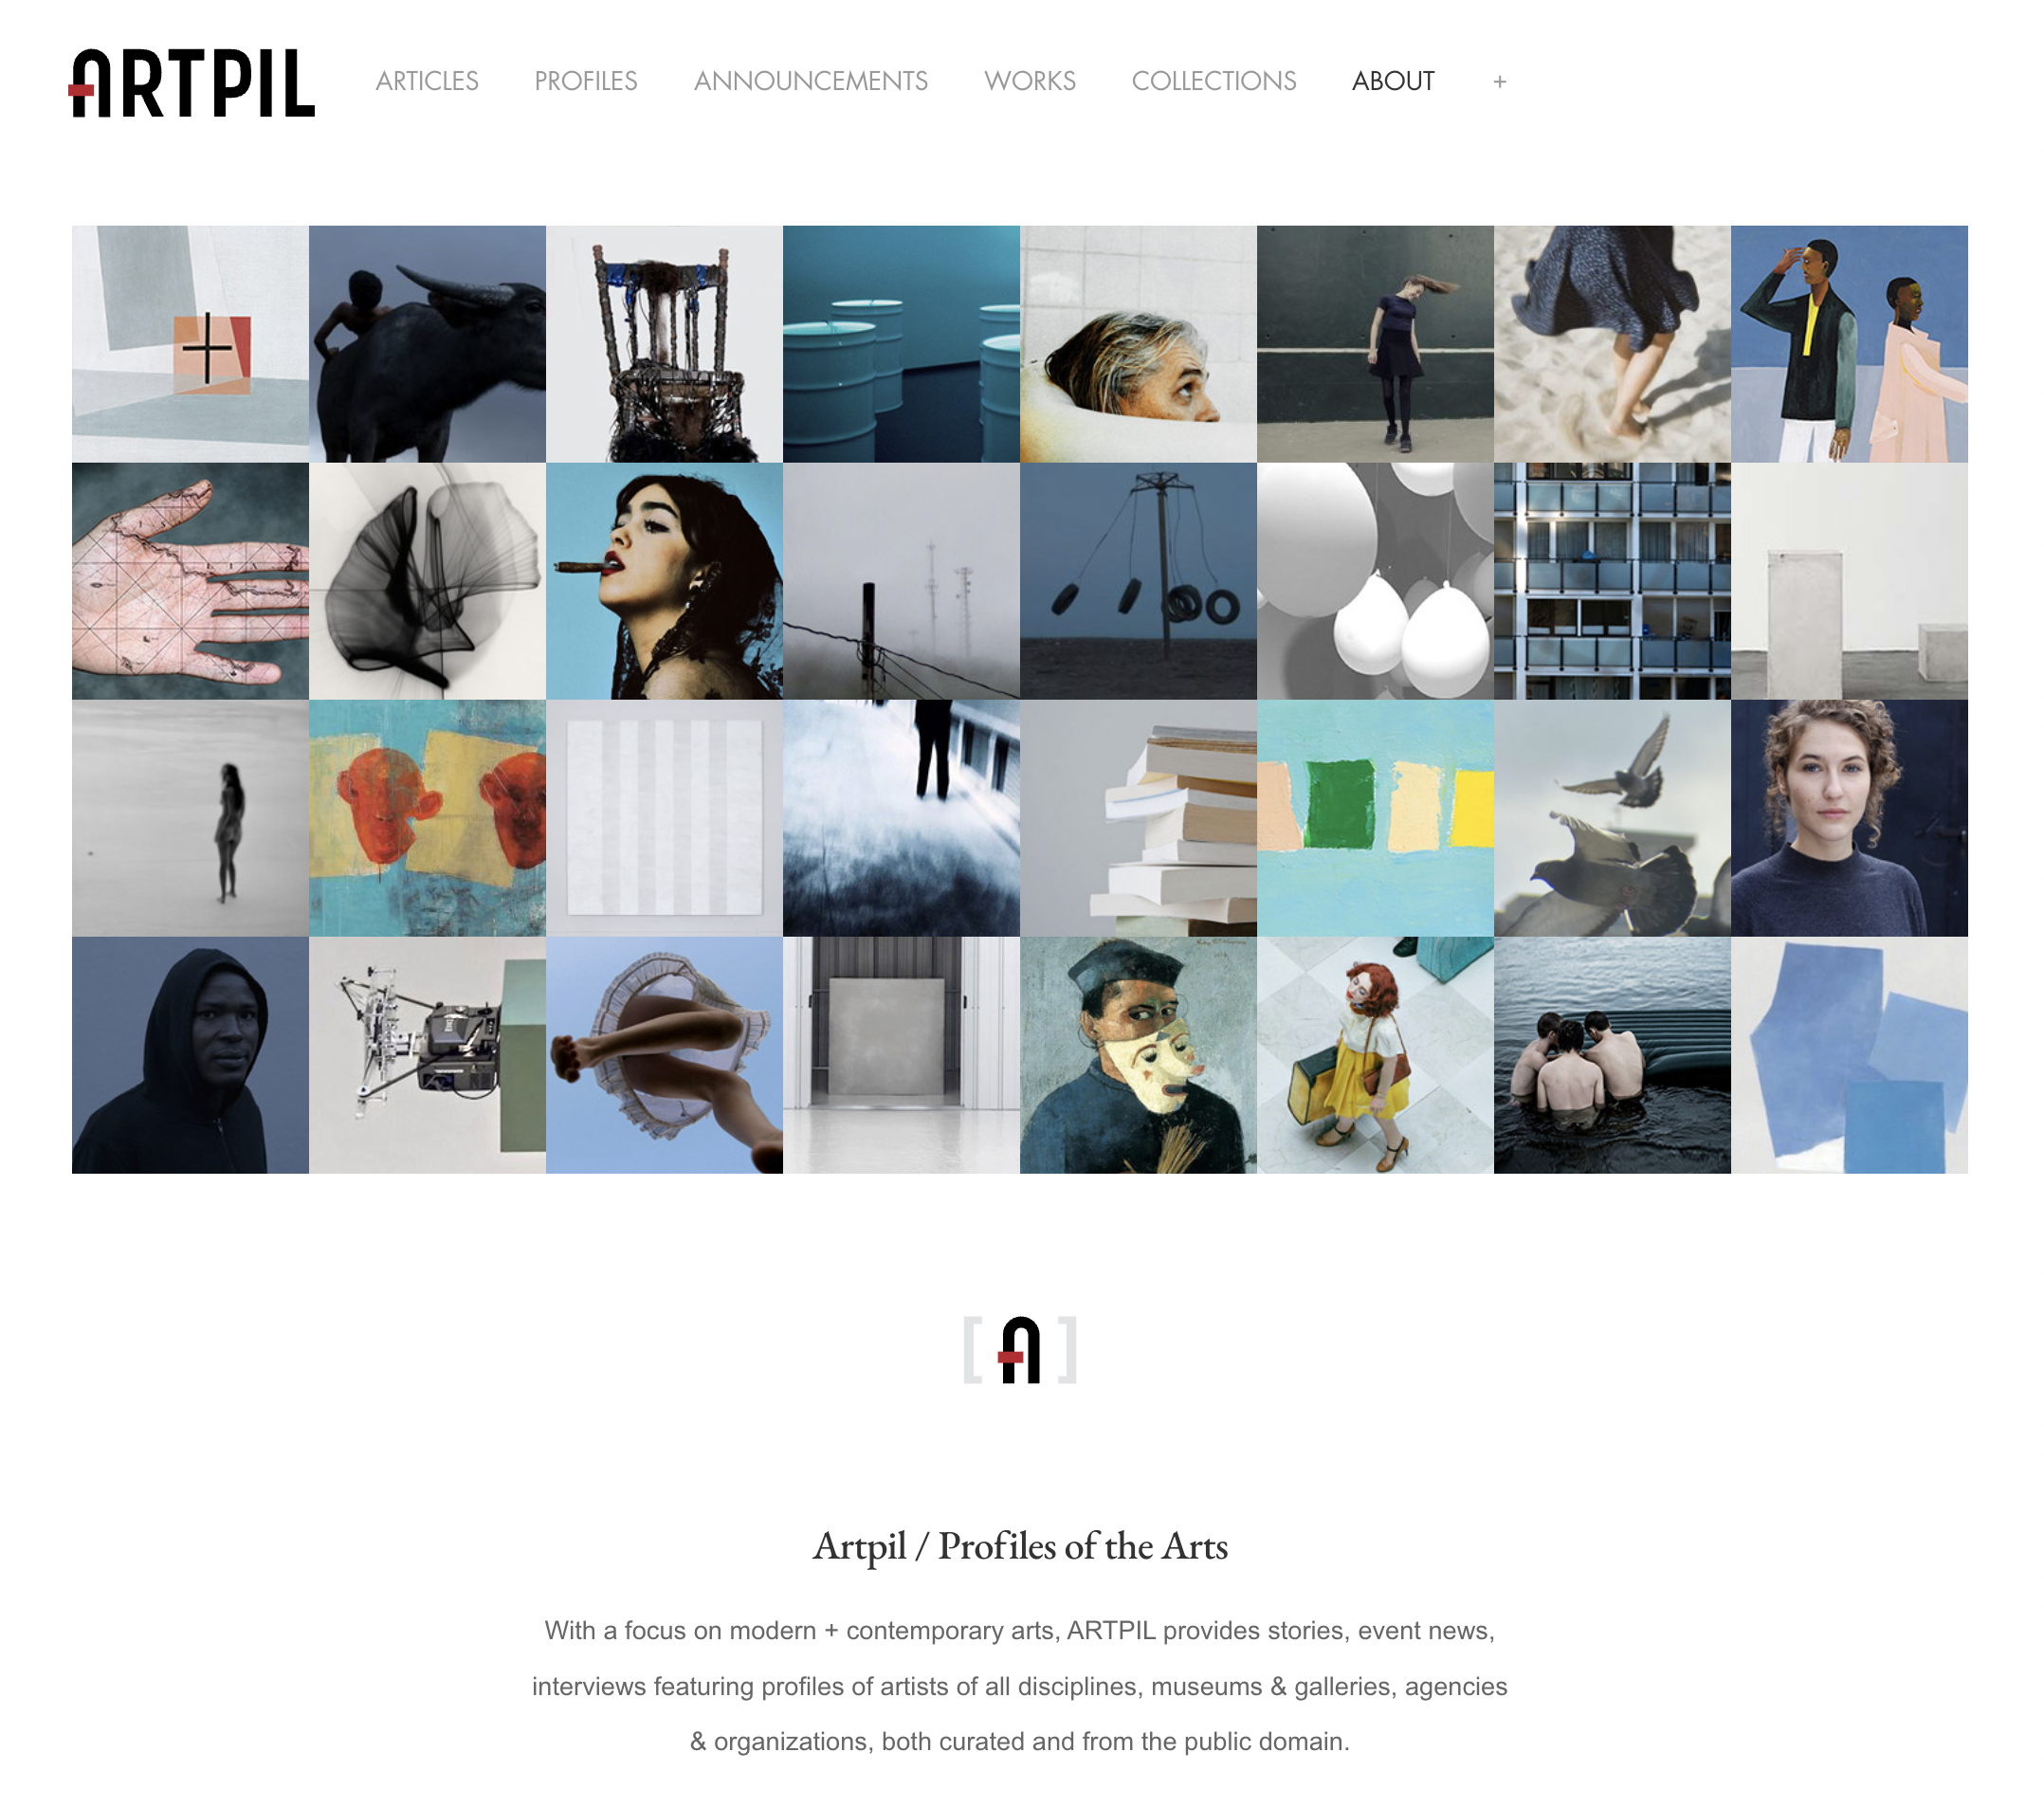 Artpil / Profiles of the Arts